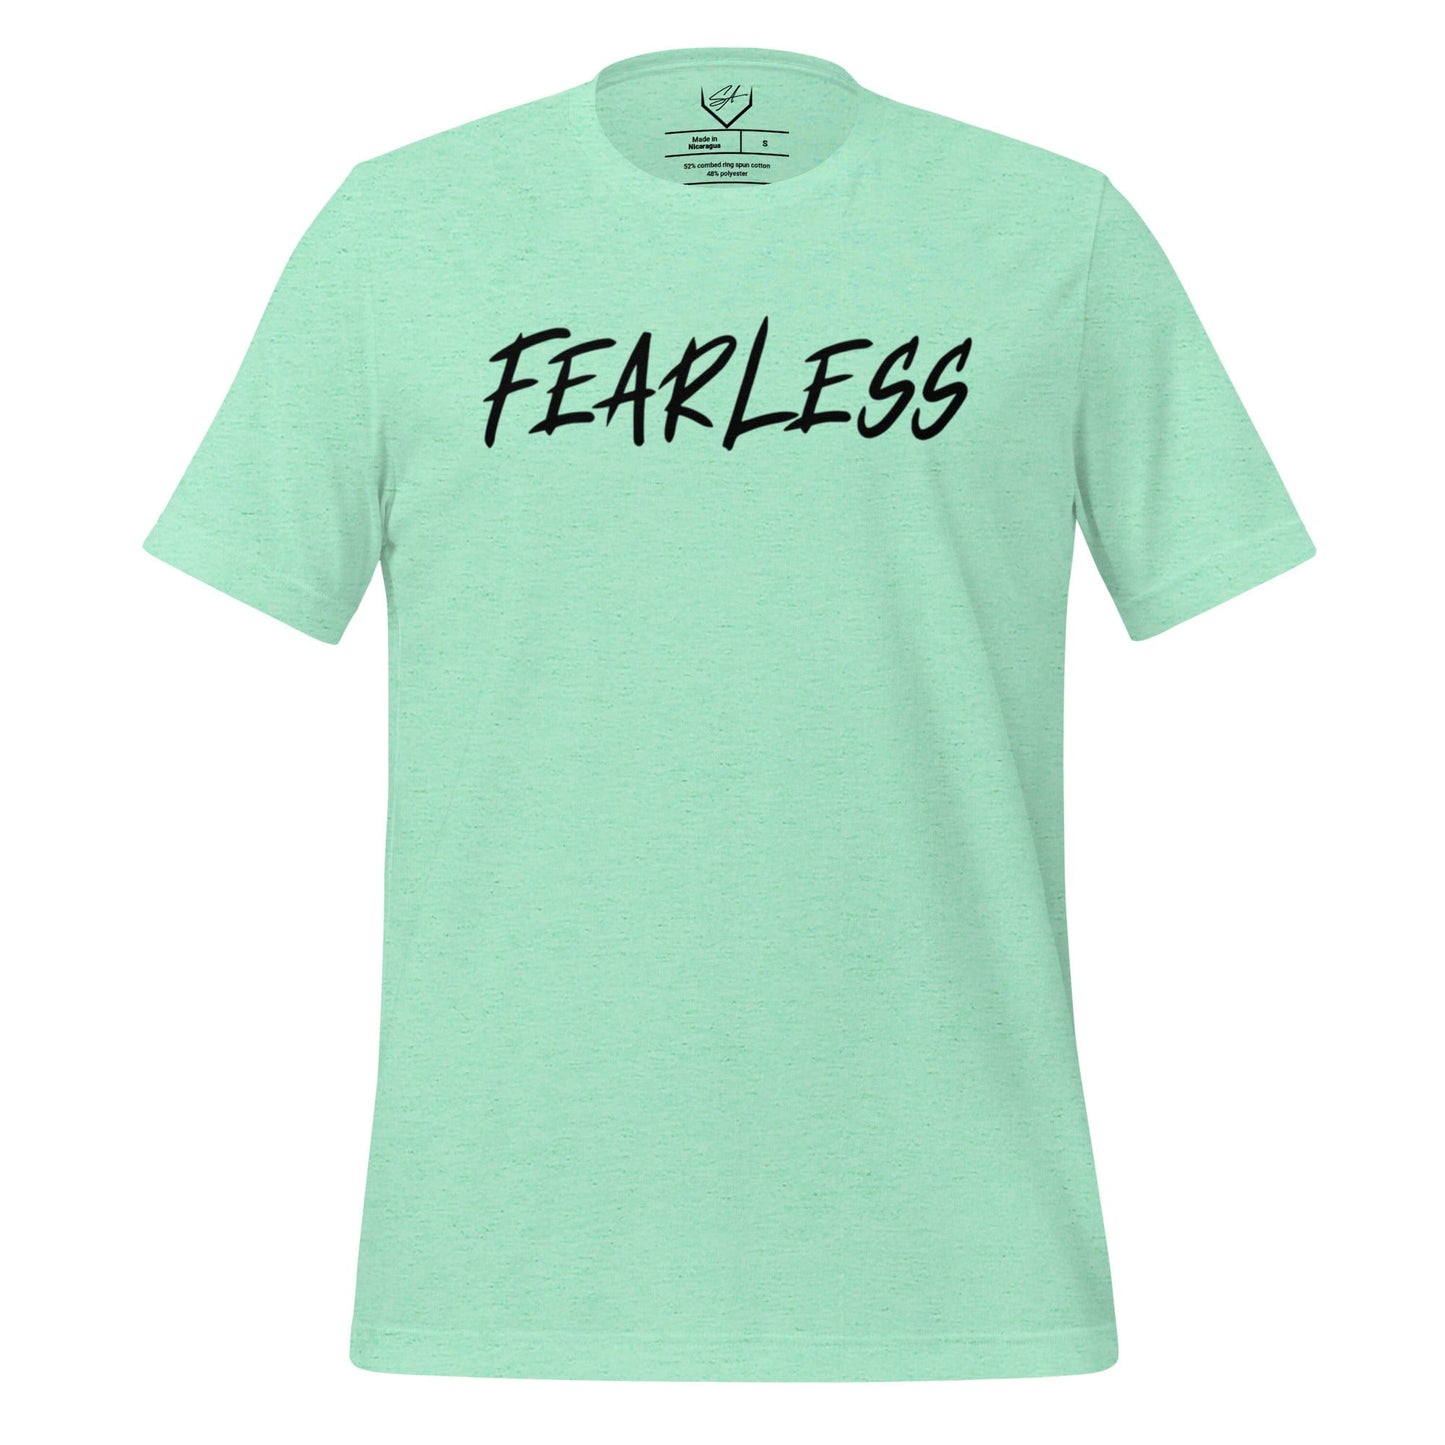 Fearless - Adult Tee